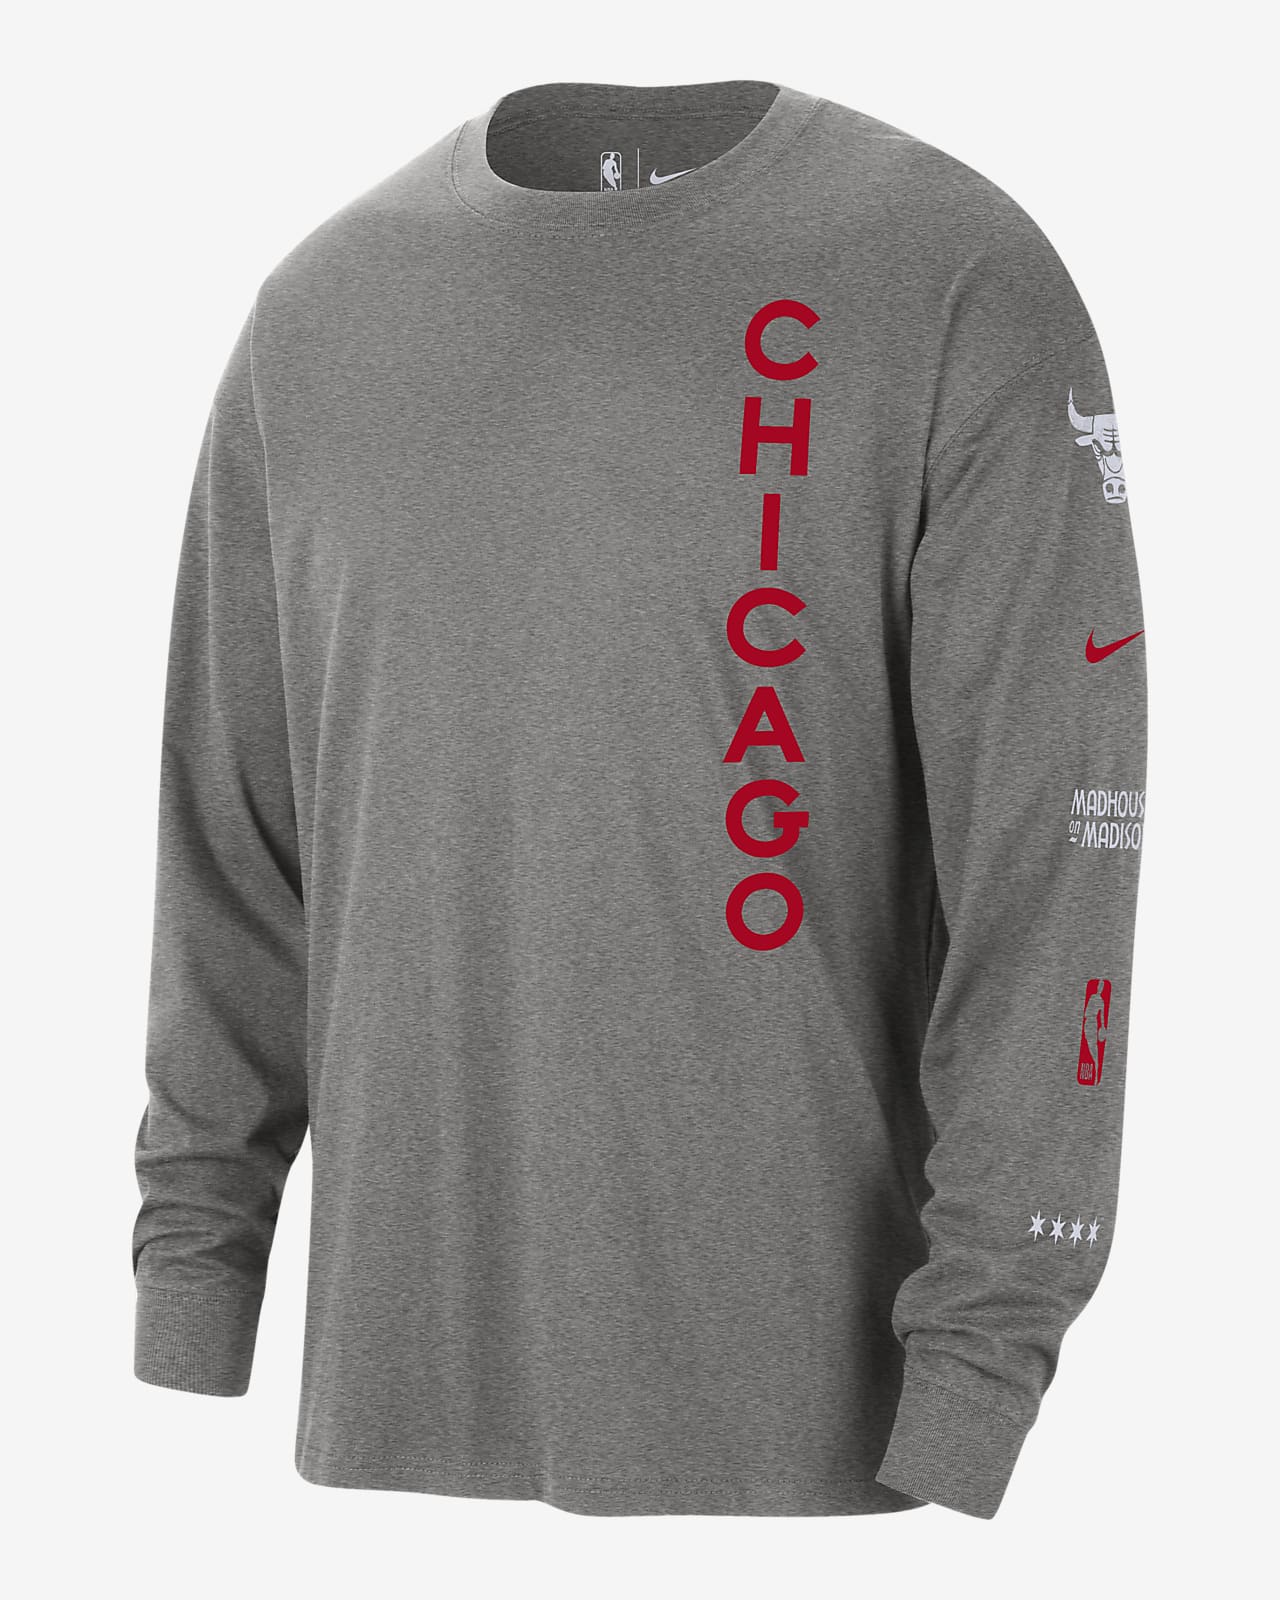 Chicago Bulls Men's Nike NBA T-Shirt